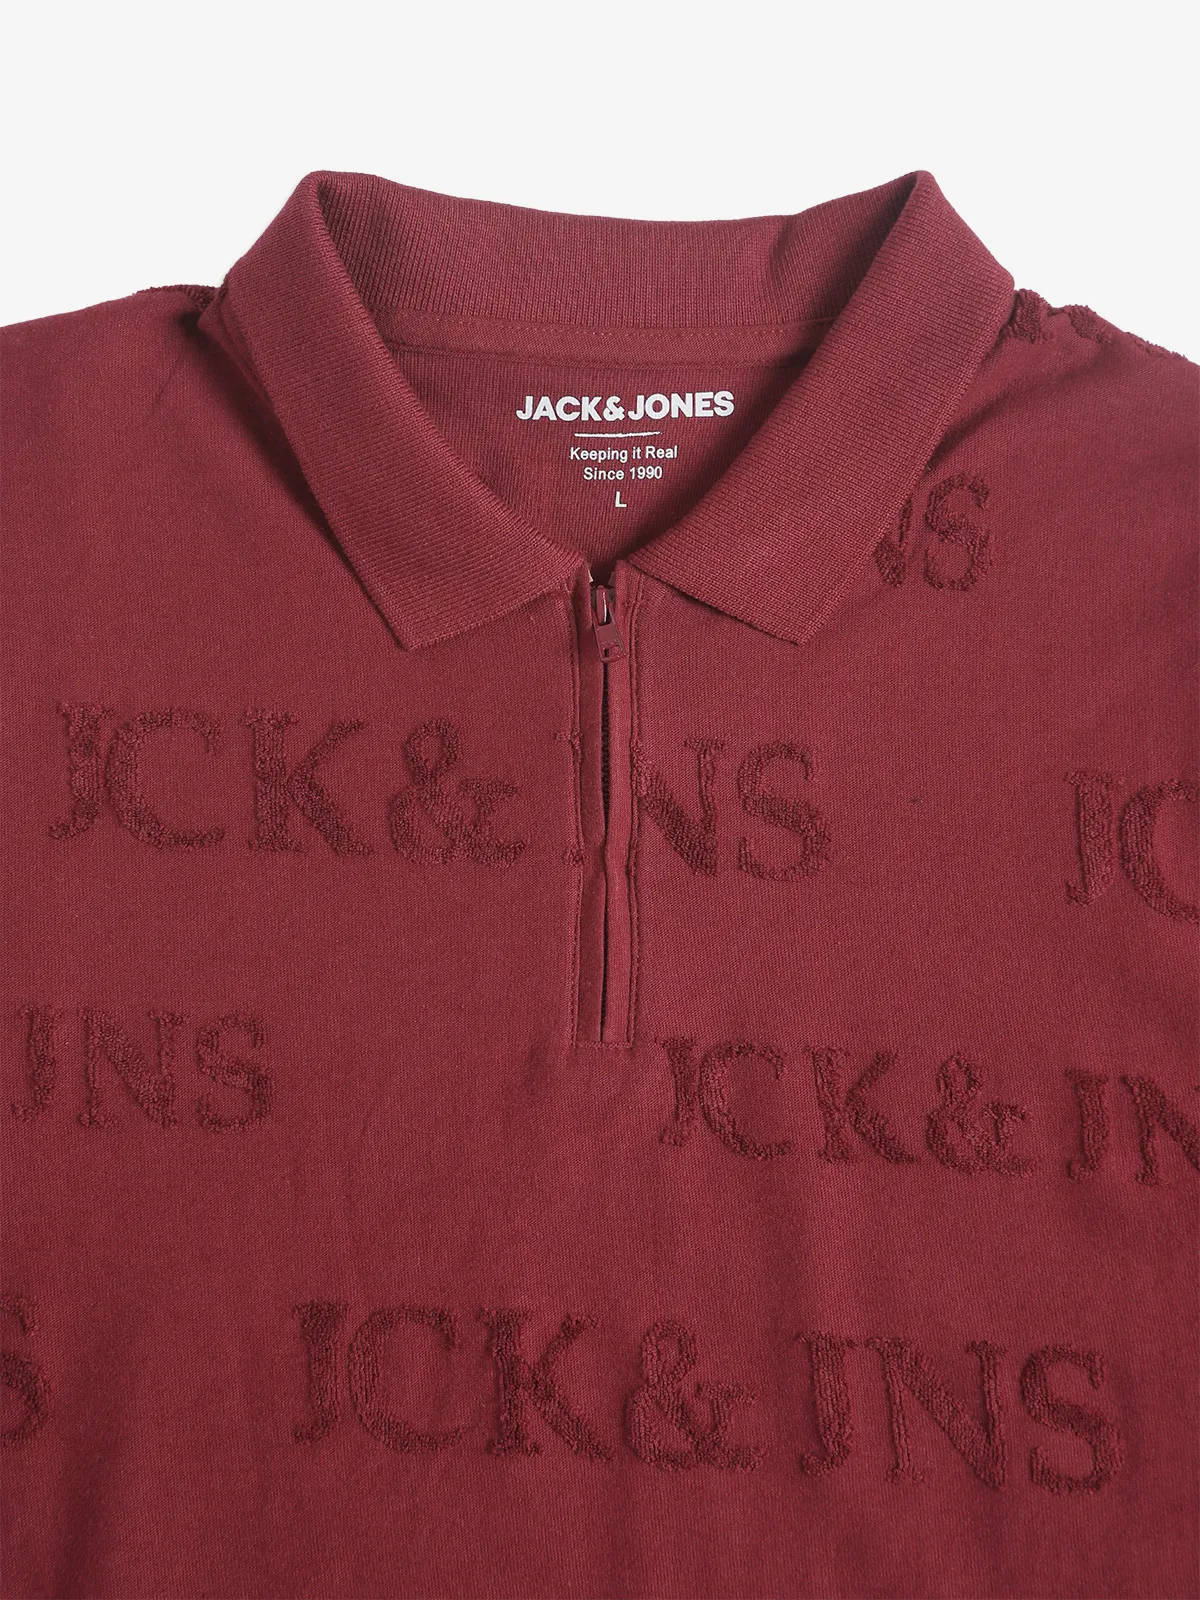 JACK&JONES maroon polo t-shirt